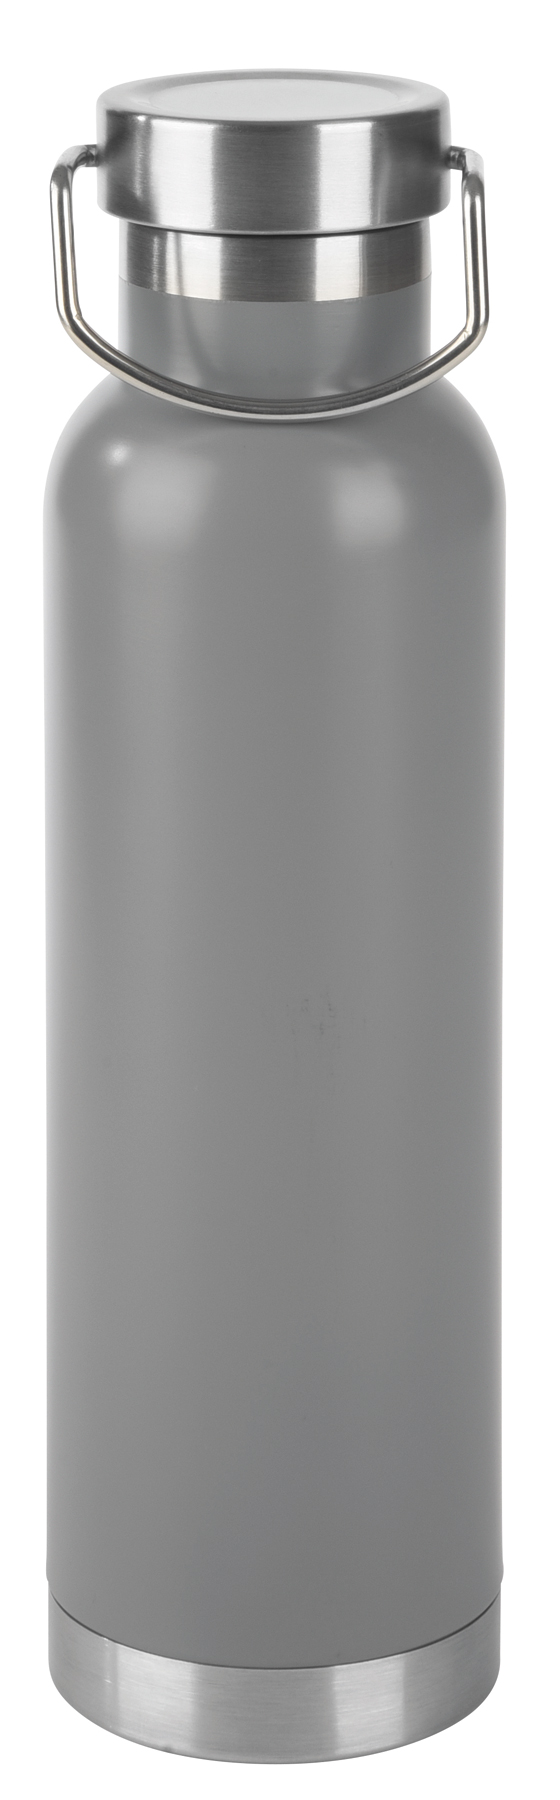 Vakuum-Isolierflasche MILITARY - Grau